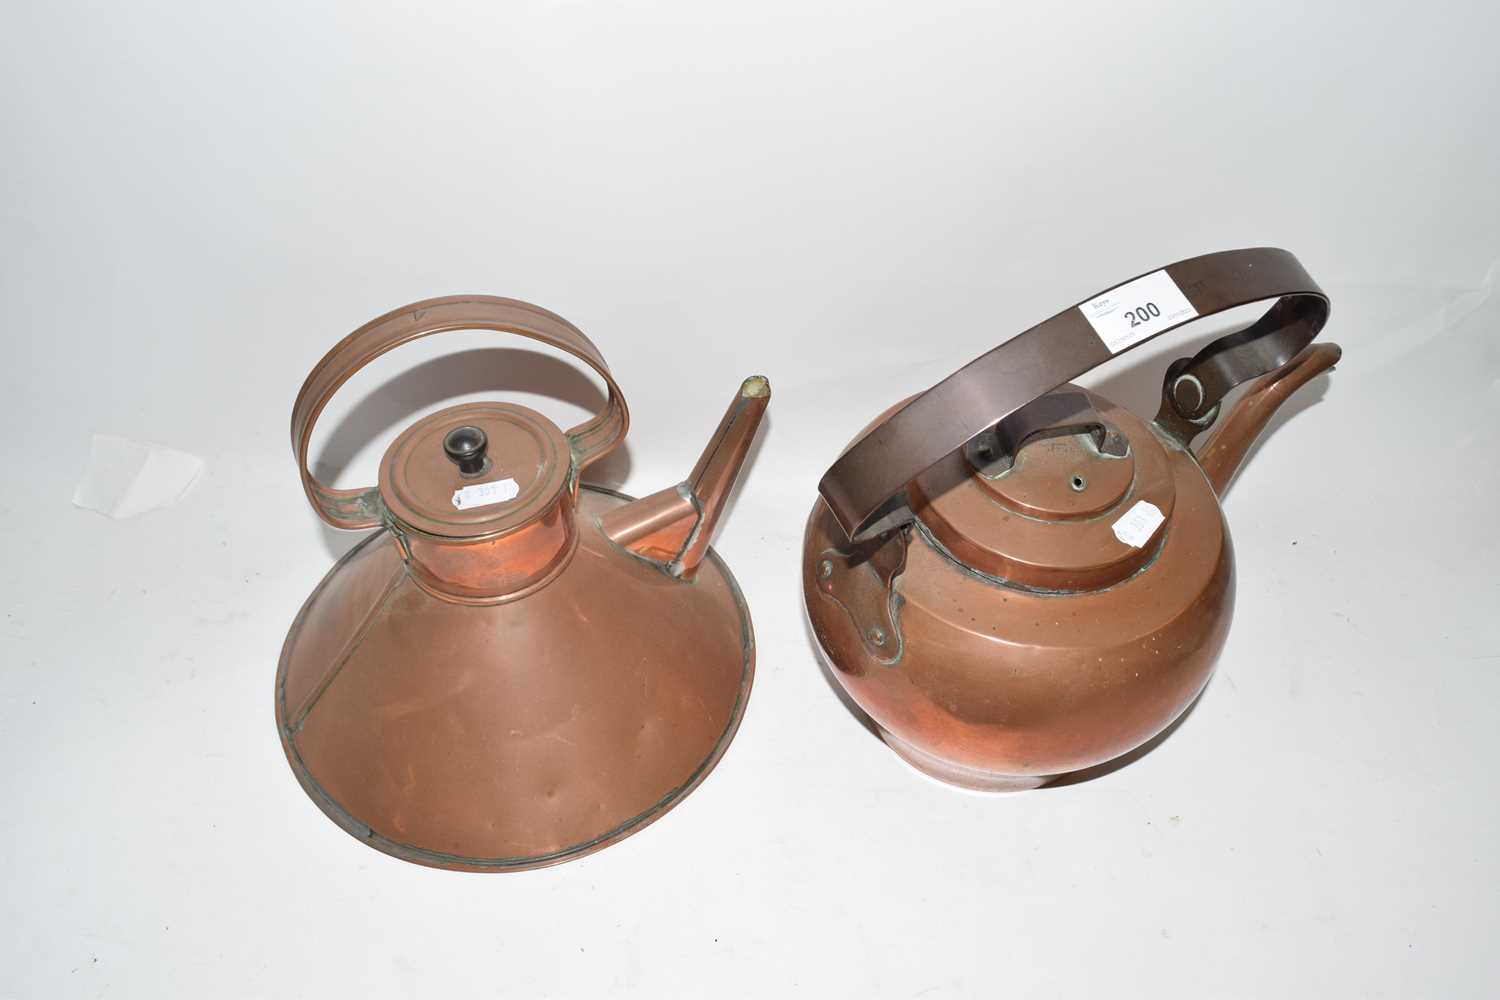 Two vintage copper kettles